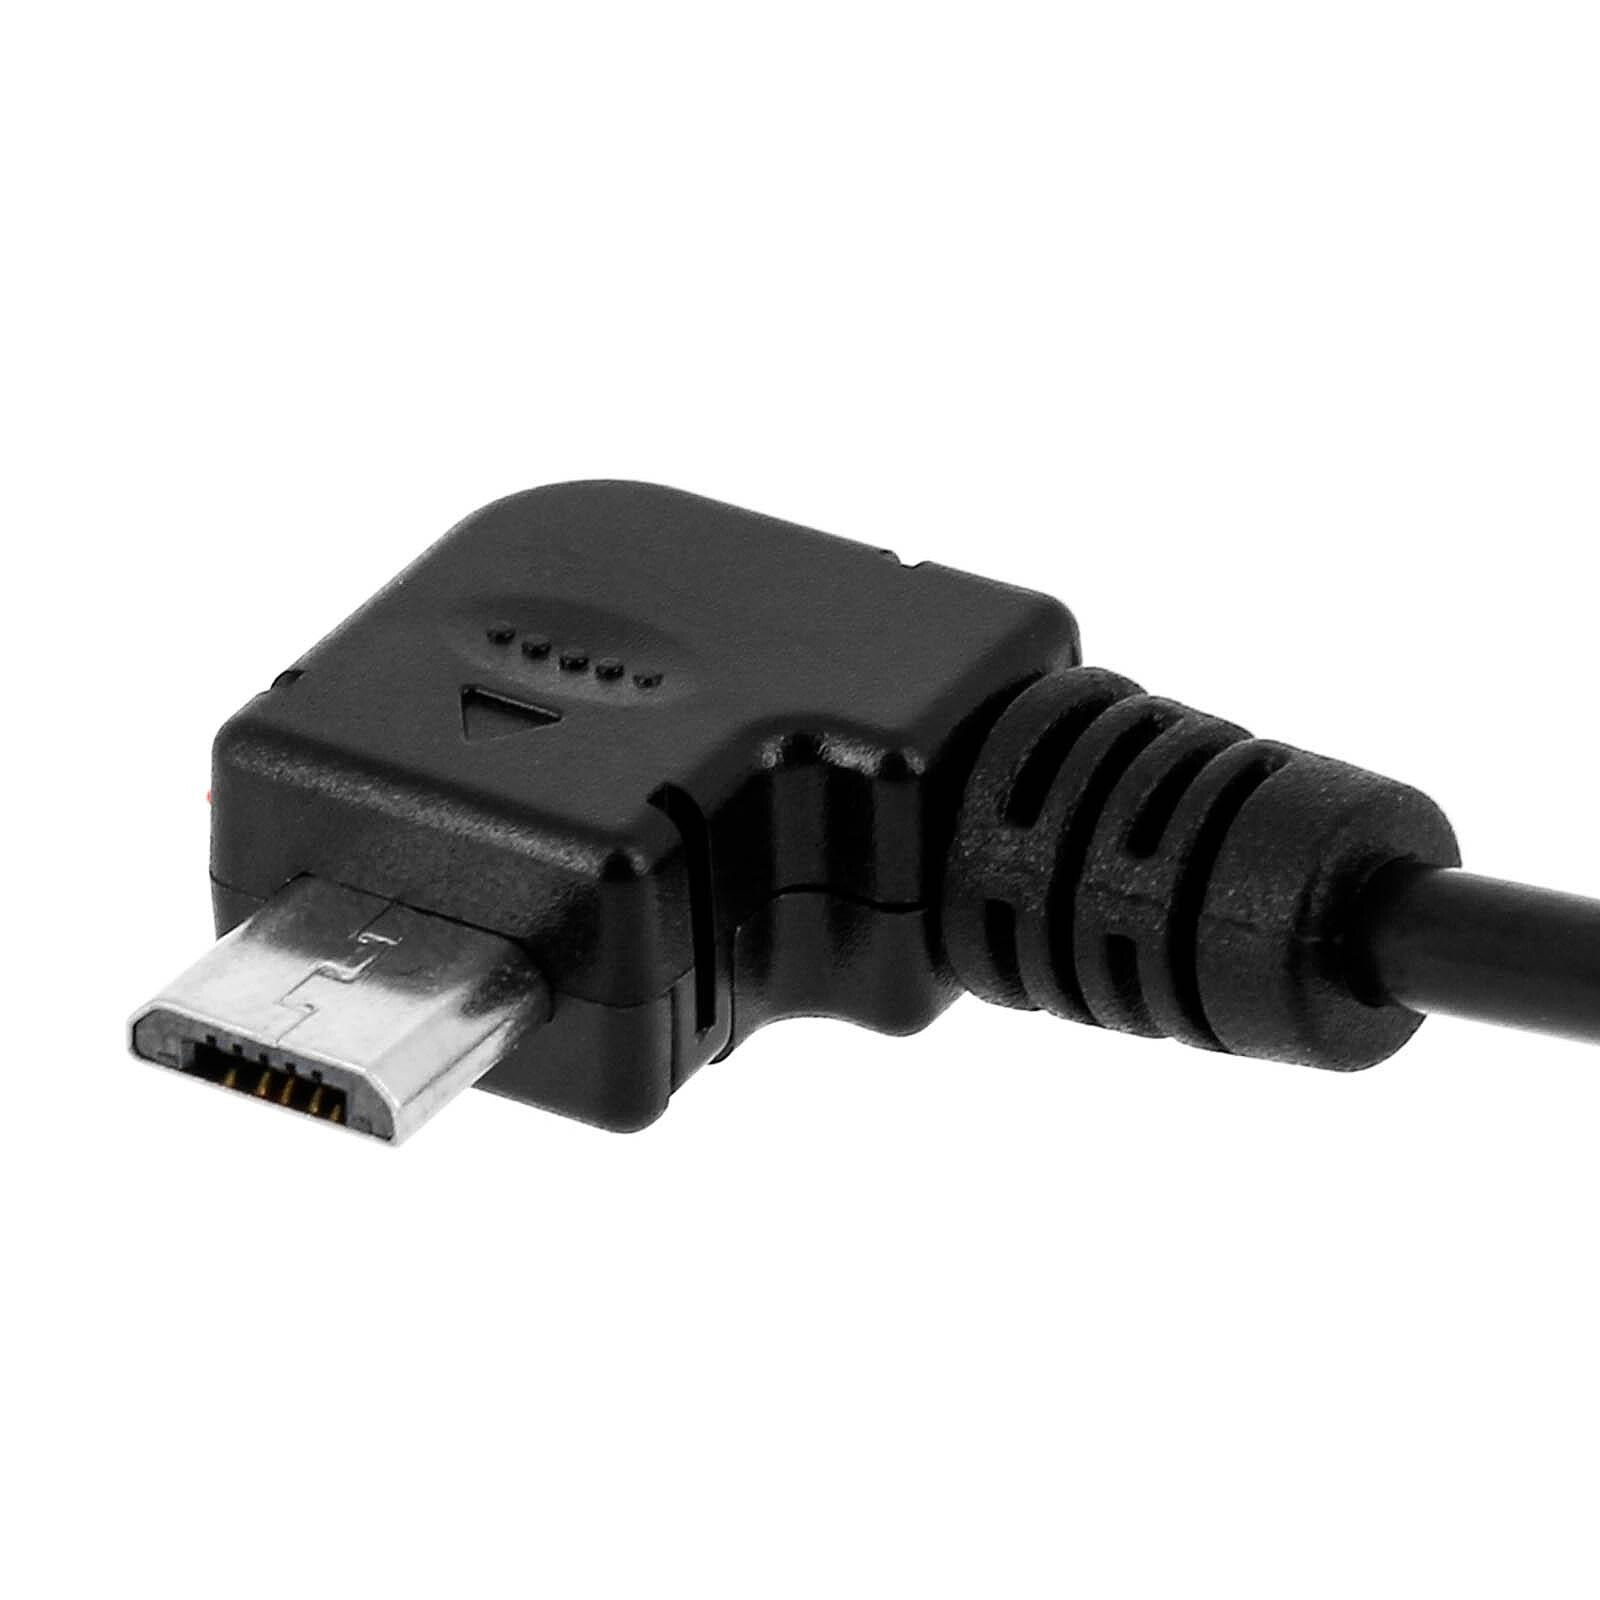 Avizar Câble USB 2.0 mâle spiralé 3 mètres vers Micro-USB coudé